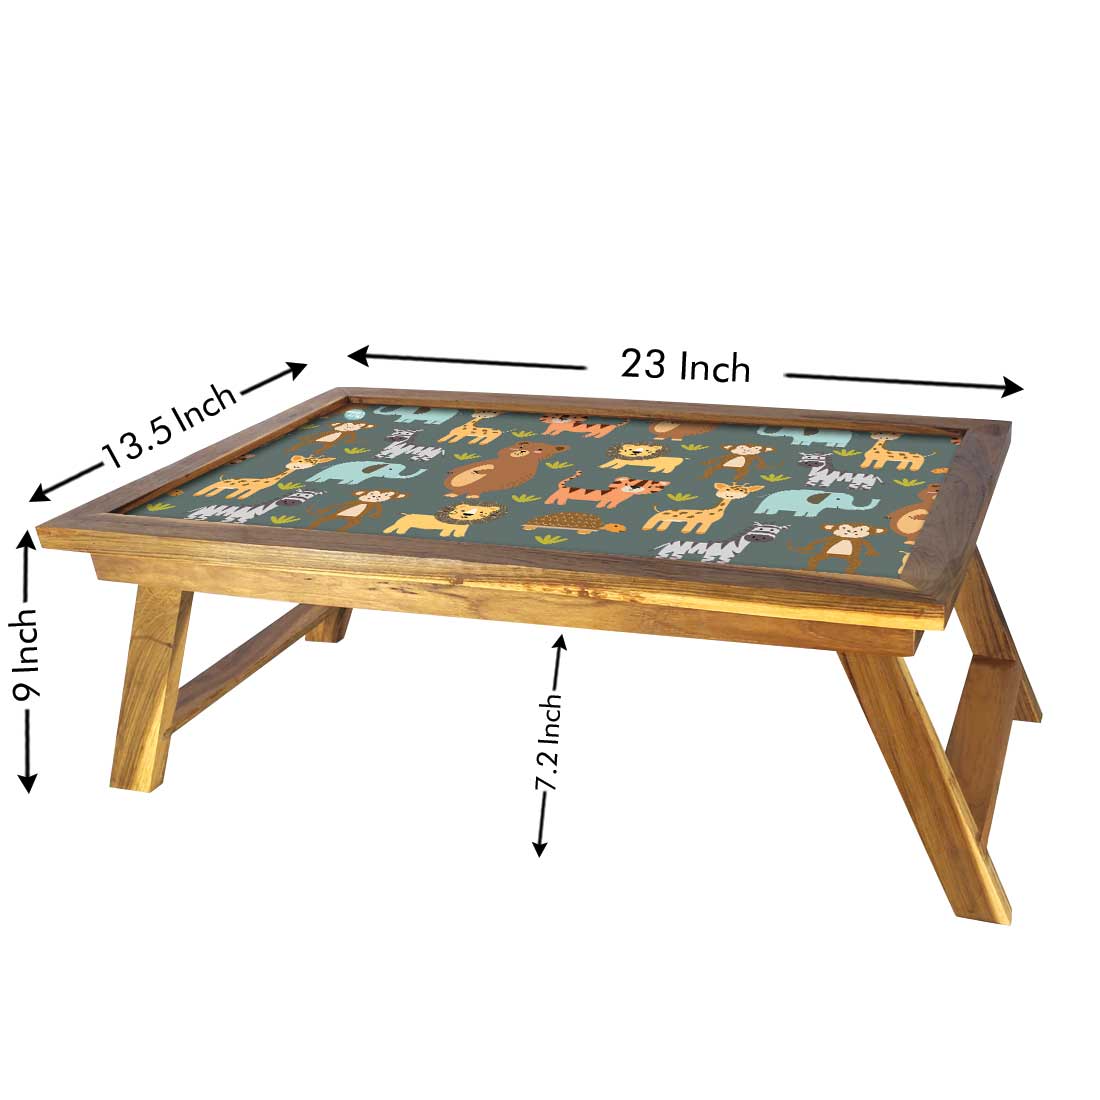 Nutcase Folding Wild Animal Printed Bed Table for Breakfast Table Nutcase